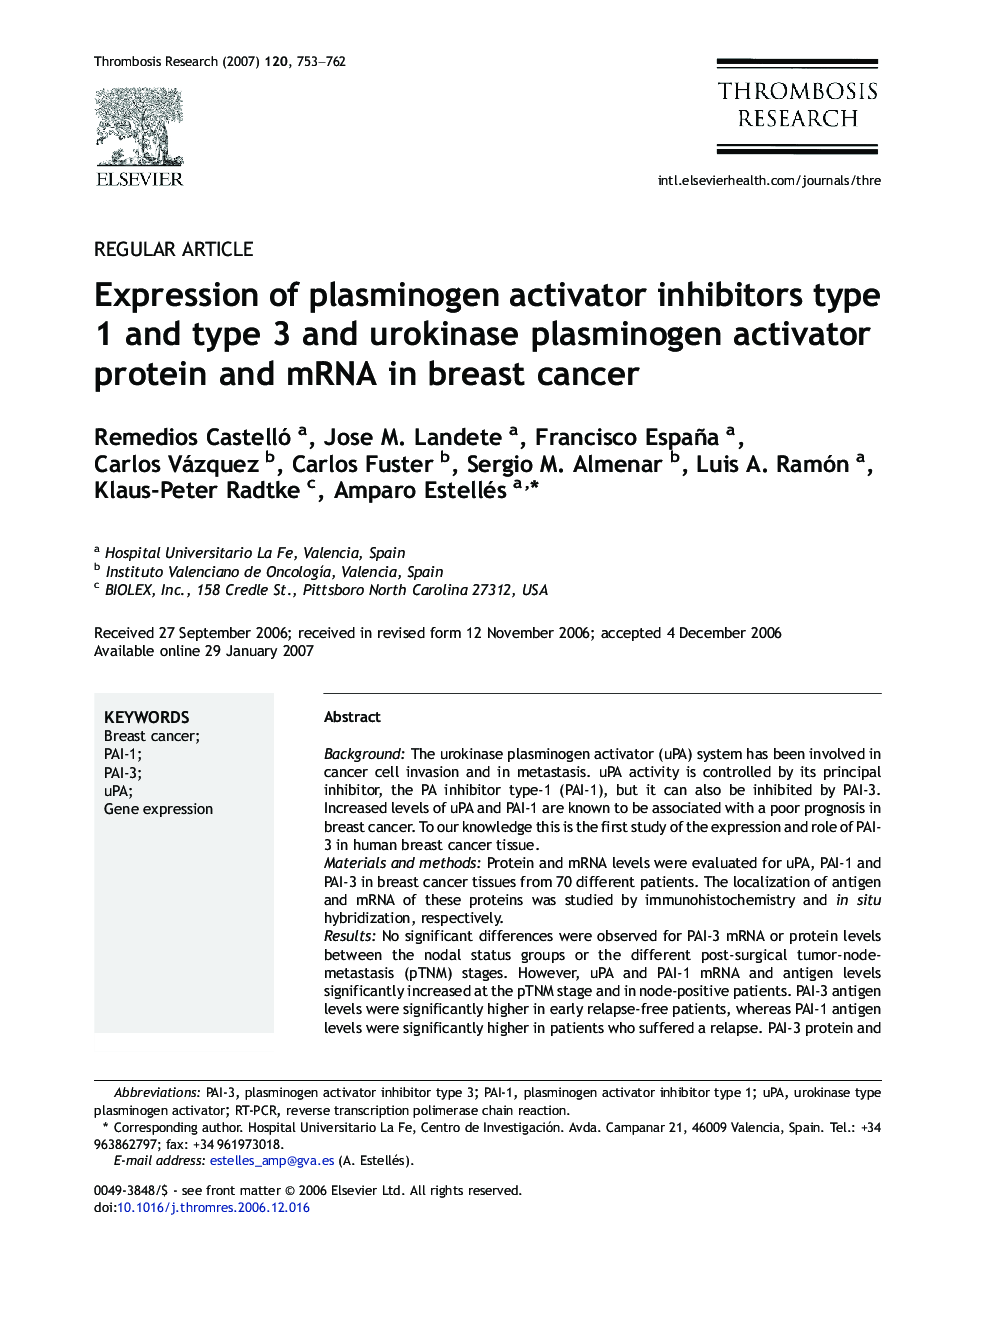 Expression of plasminogen activator inhibitors type 1 and type 3 and urokinase plasminogen activator protein and mRNA in breast cancer